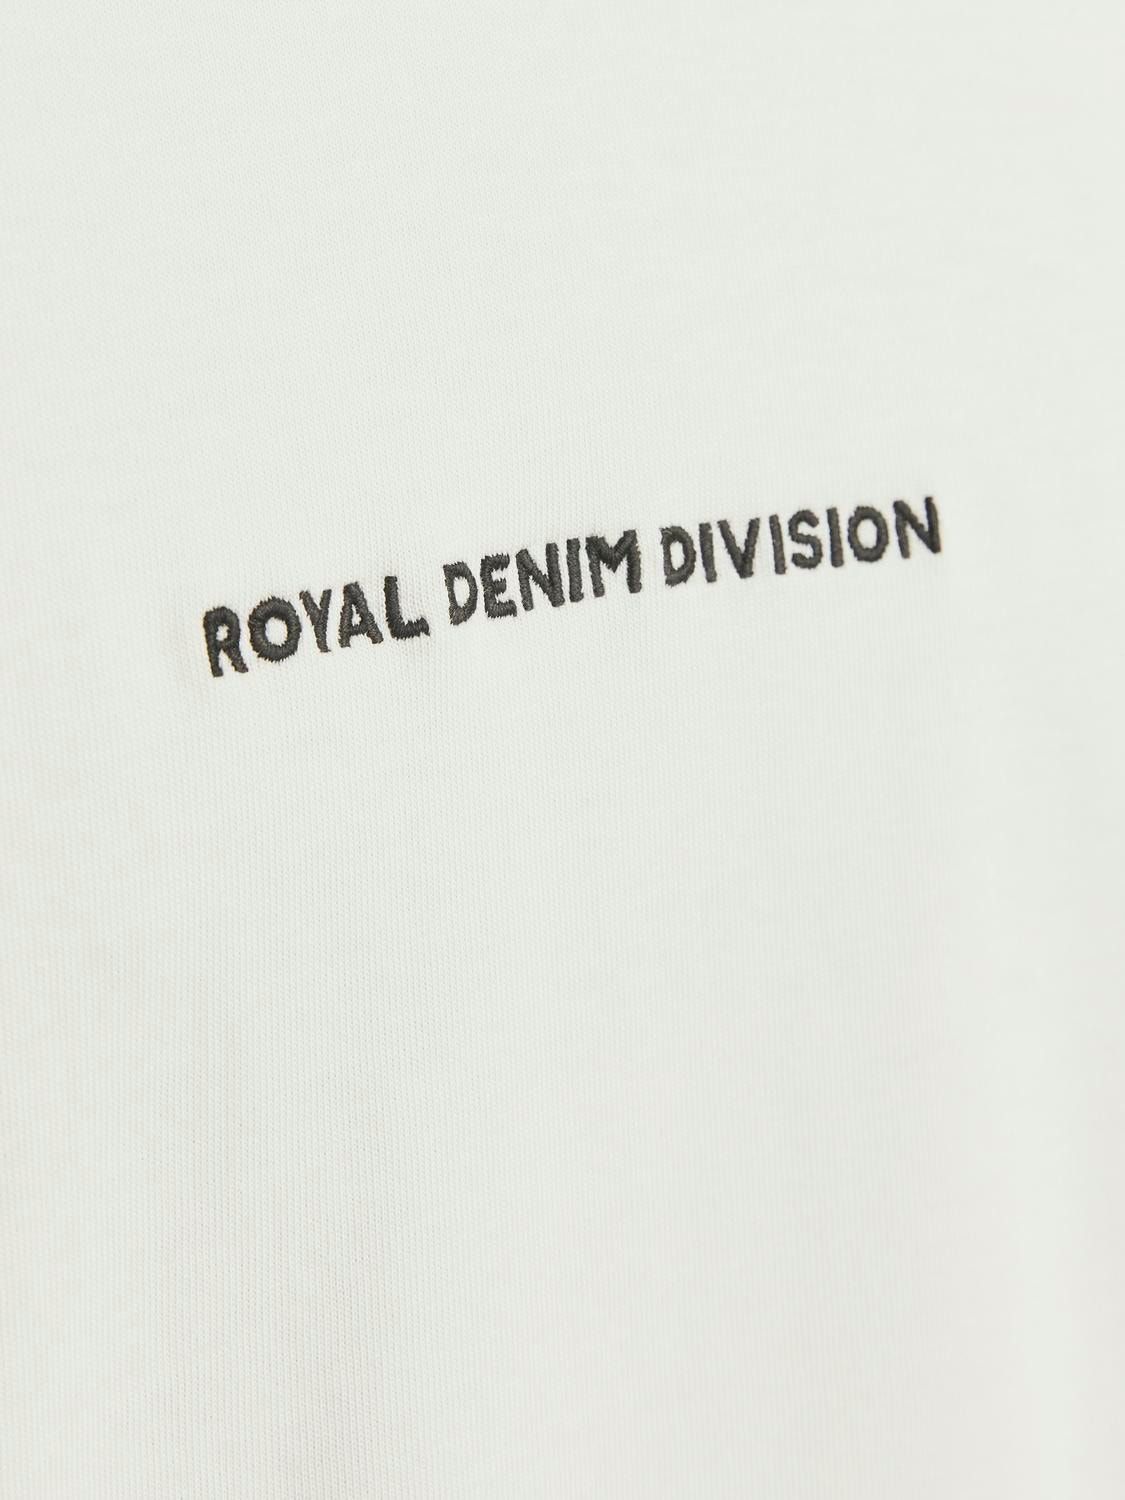 Jack & Jones RDD T-shirt Imprimé Col rond -Egret - 12253392